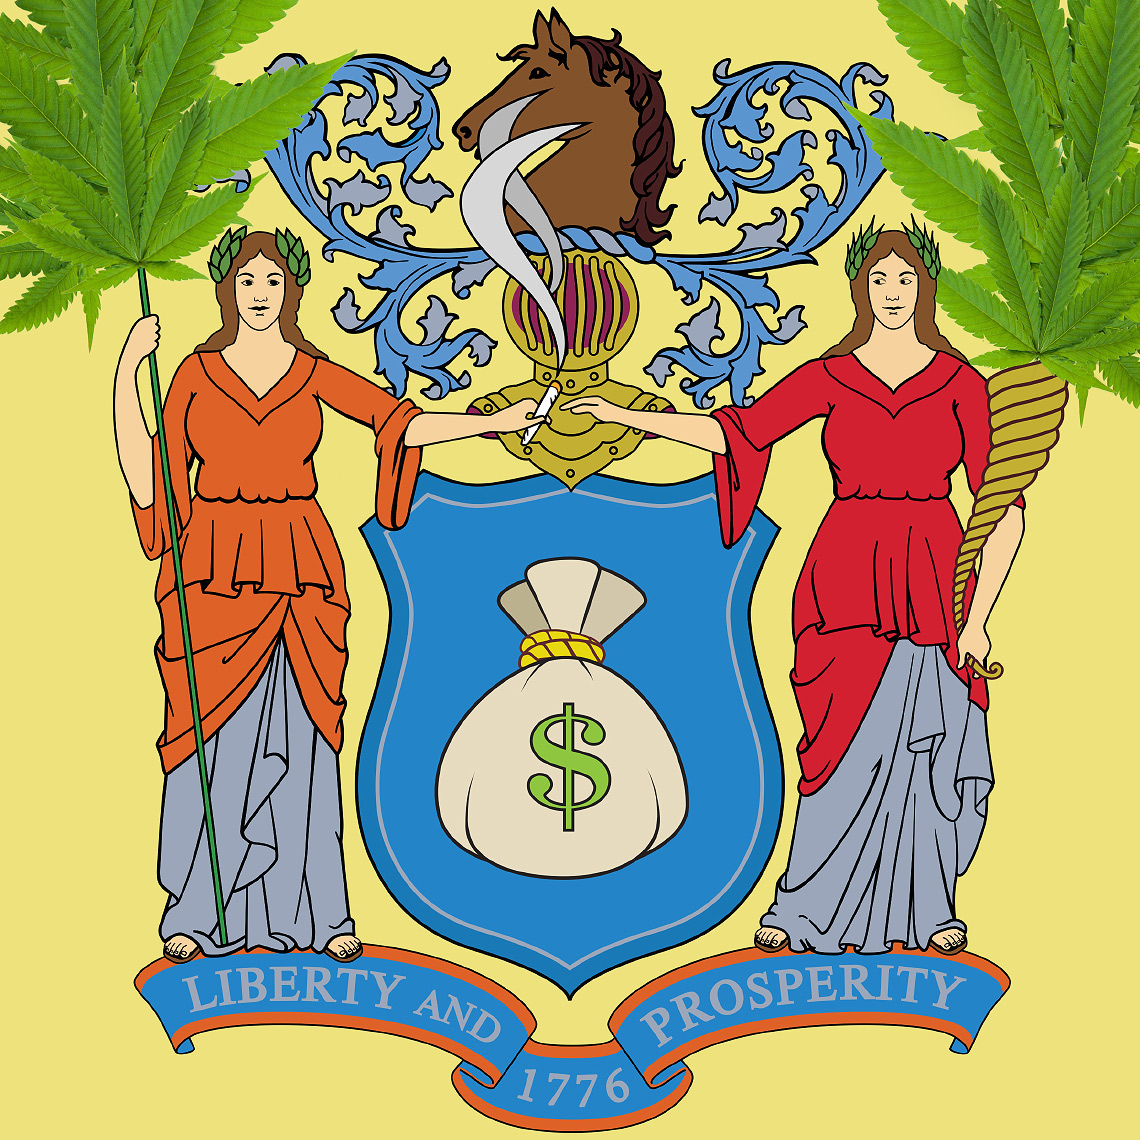 Marijuana business in New Jersey illustration by John Kuczala